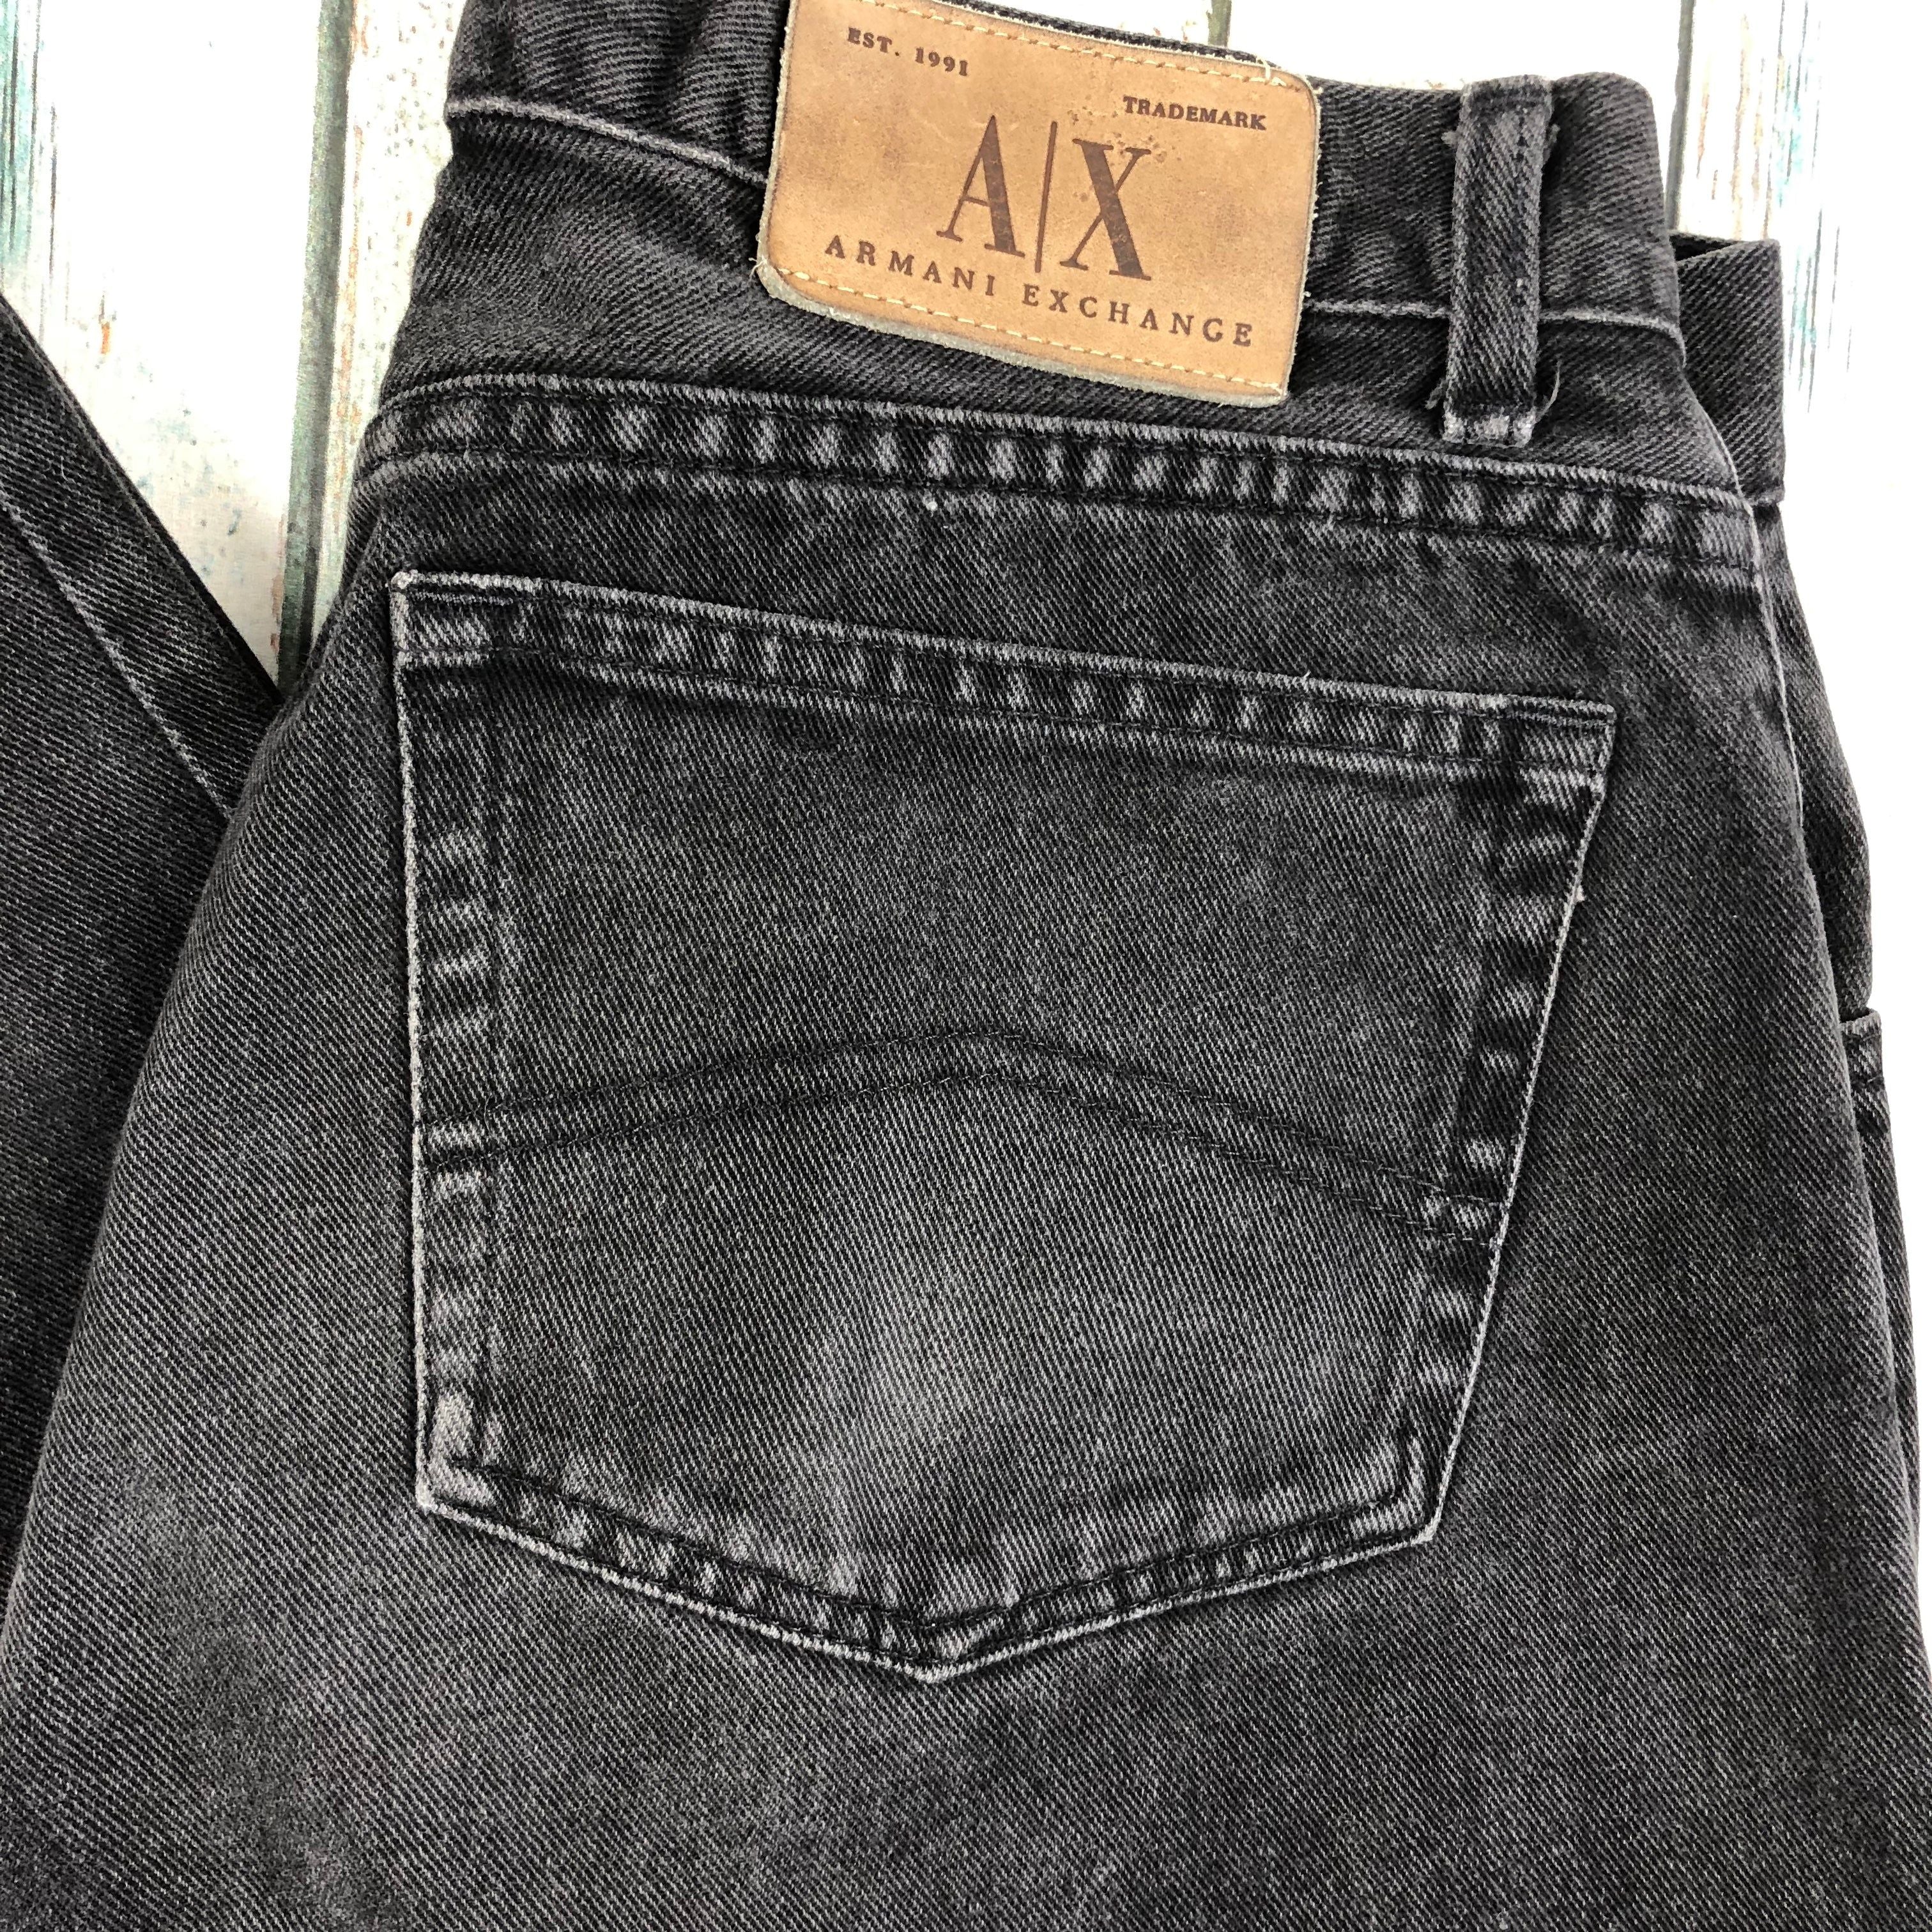 armani jeans size